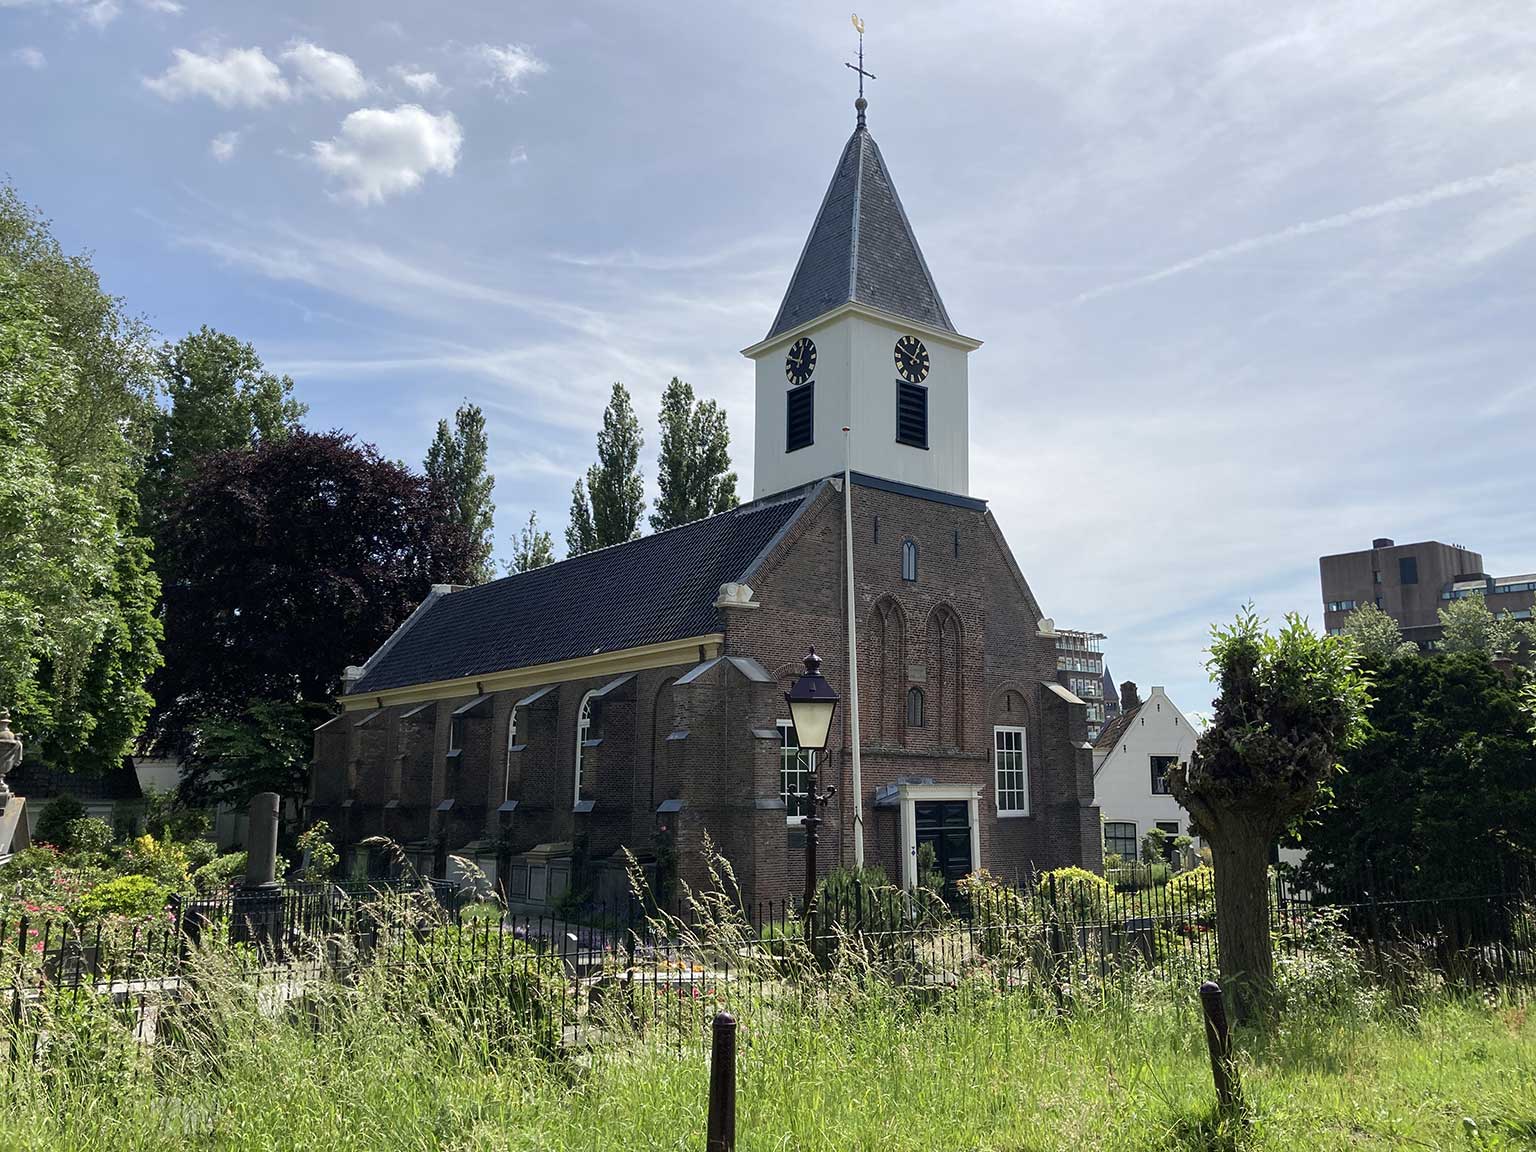 Petrus church in Sloterdijk, Amsterdam